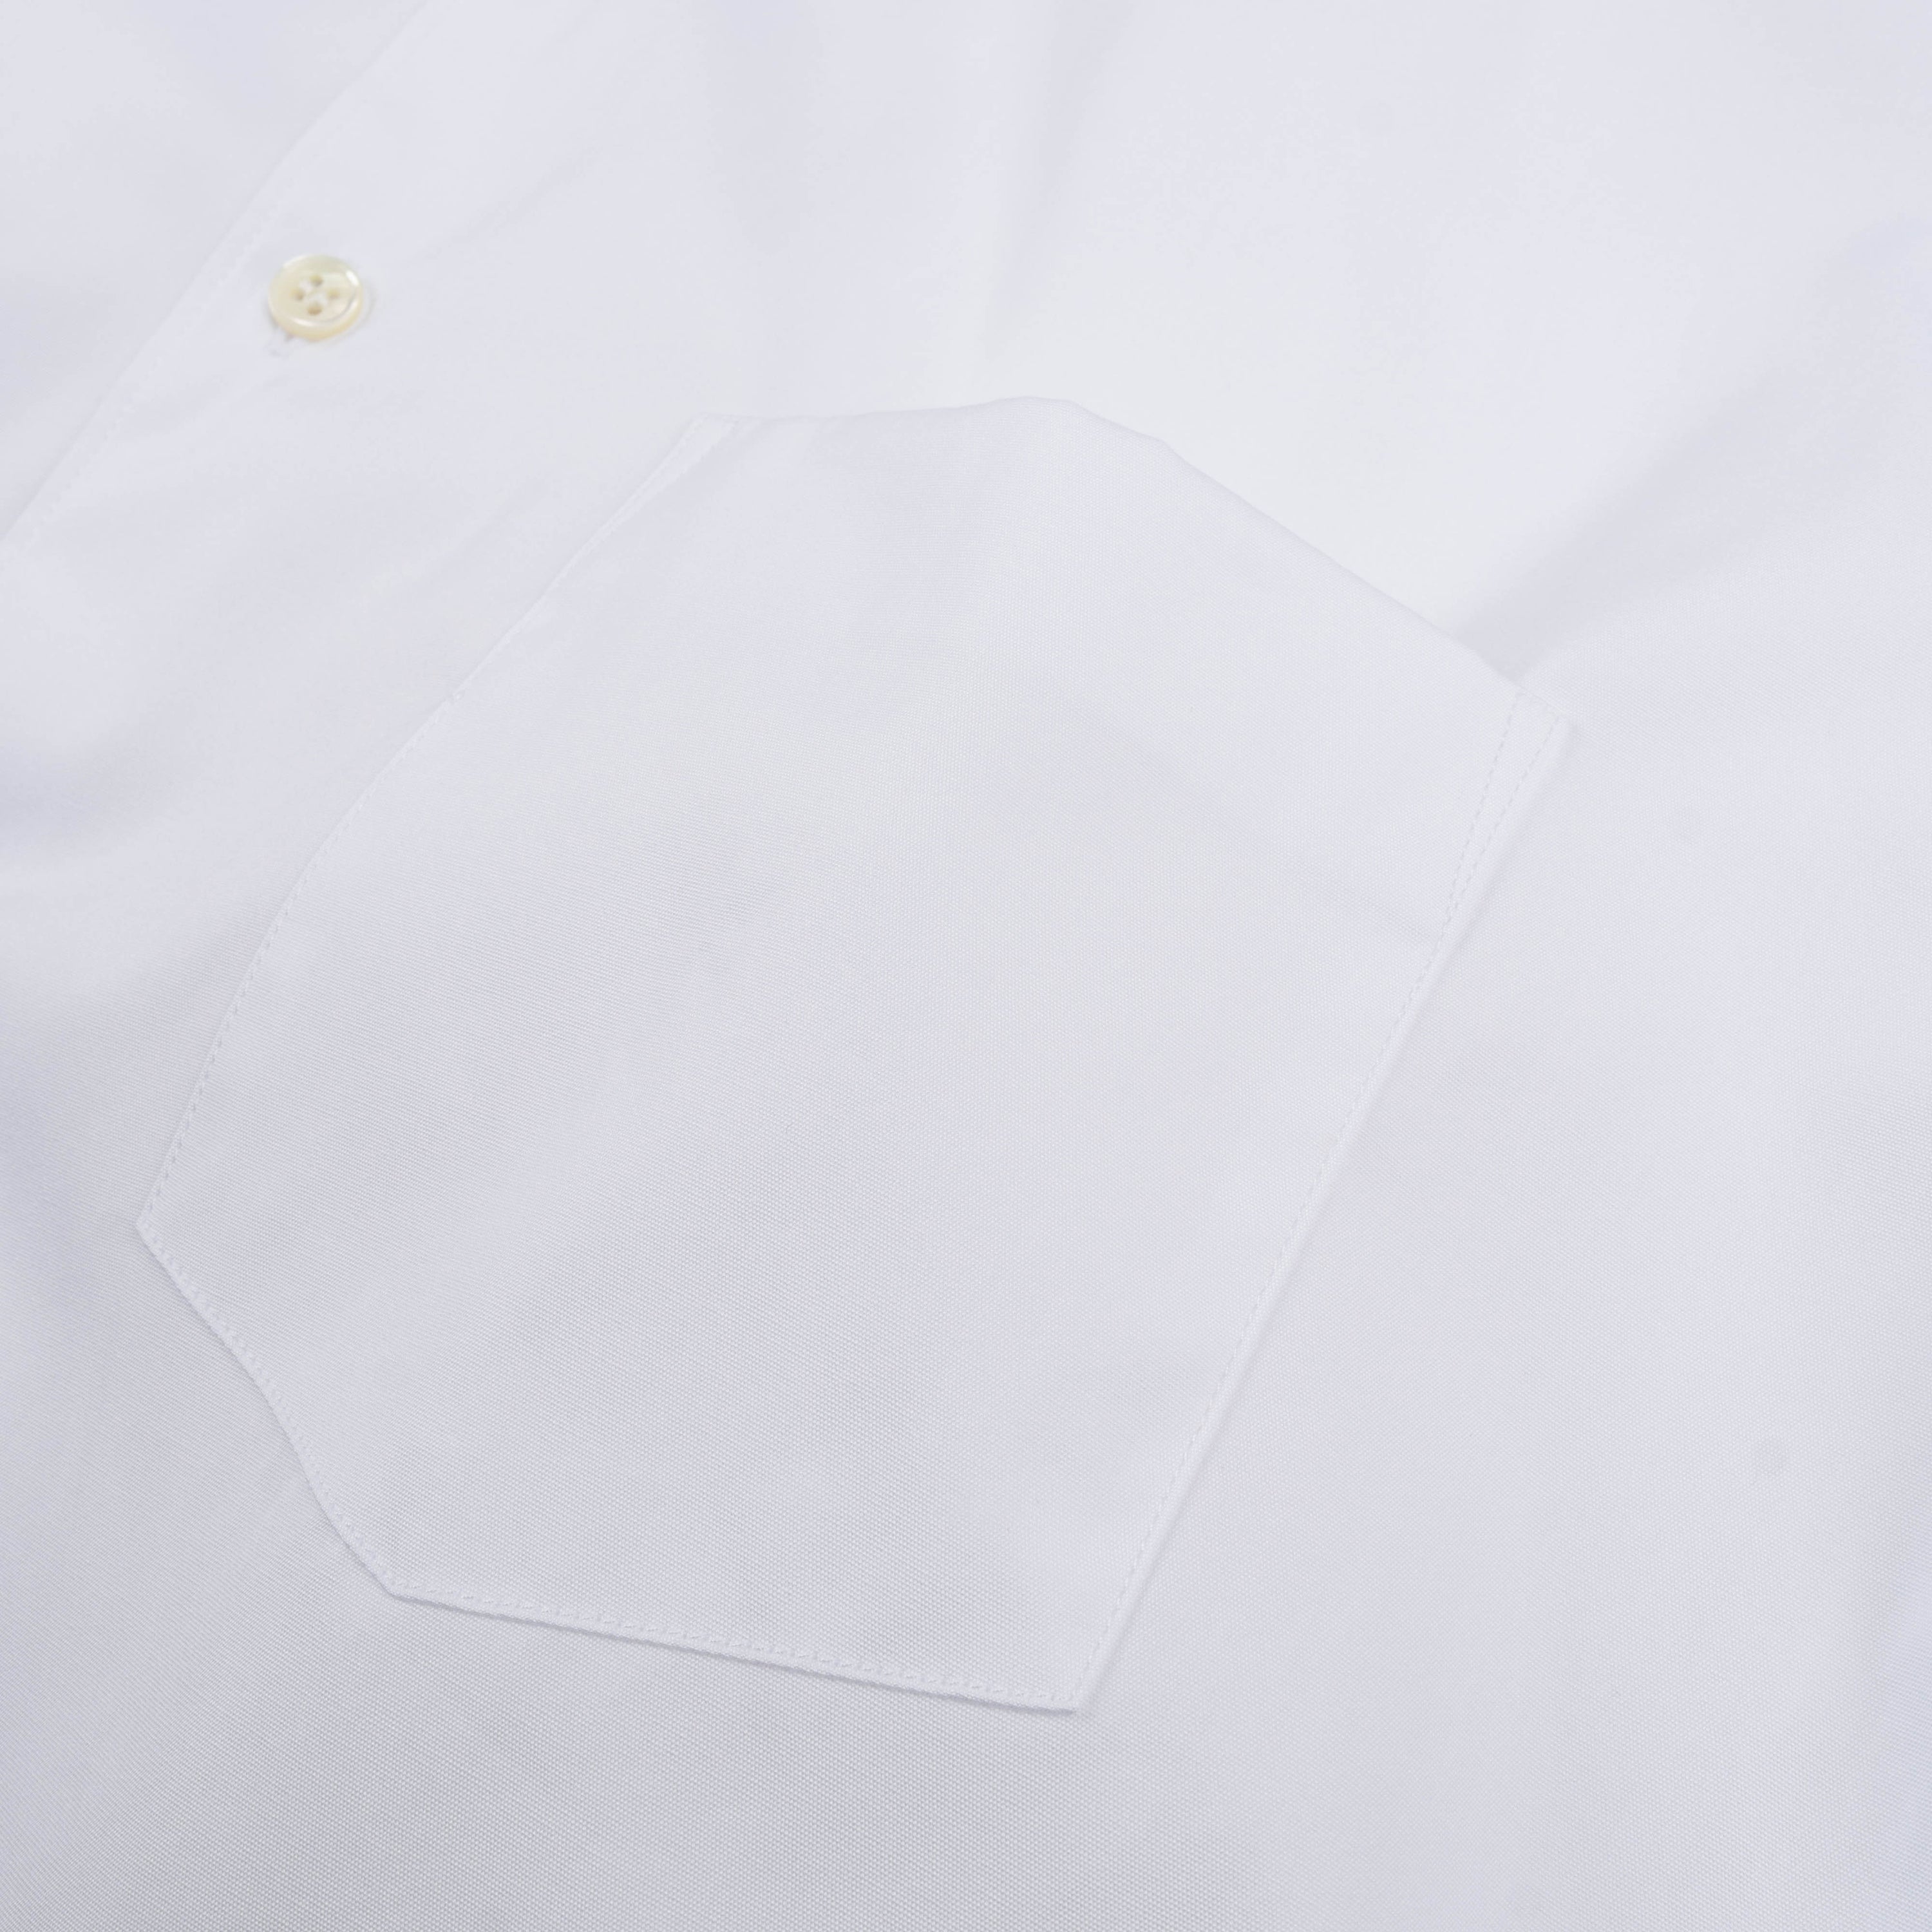 CDG SHIRT Andy Warhol Cotton Shirt White FM-B018-S24